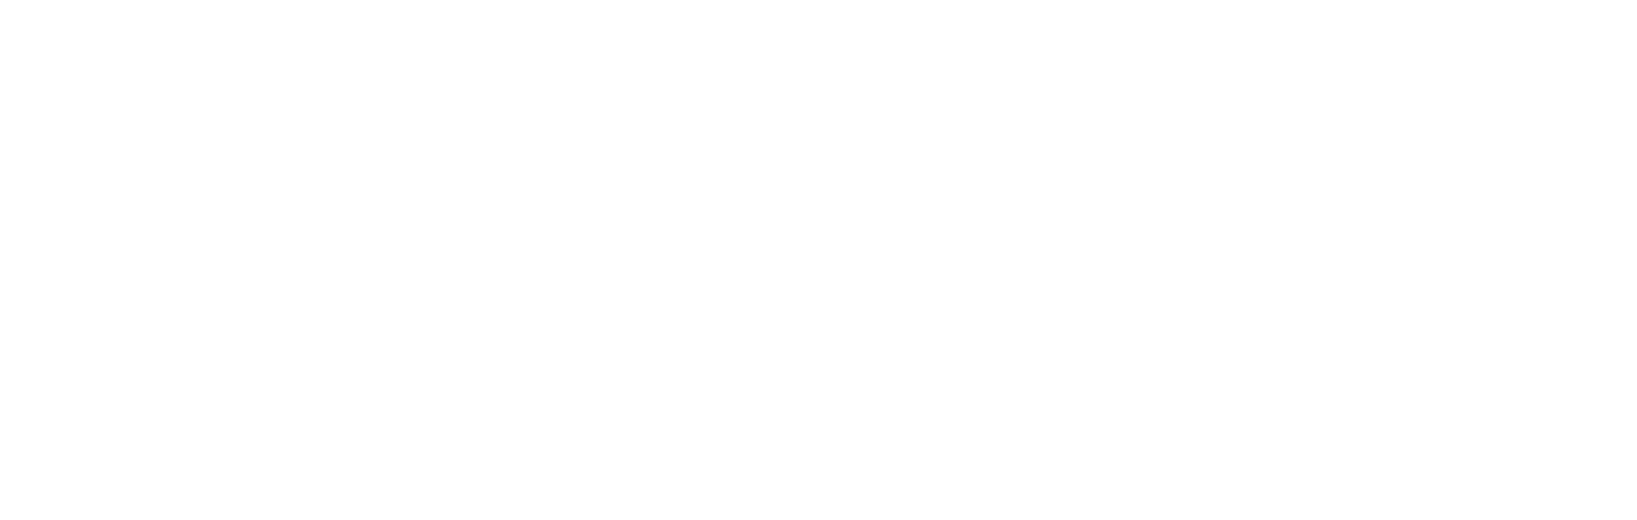 Ascent Insurance